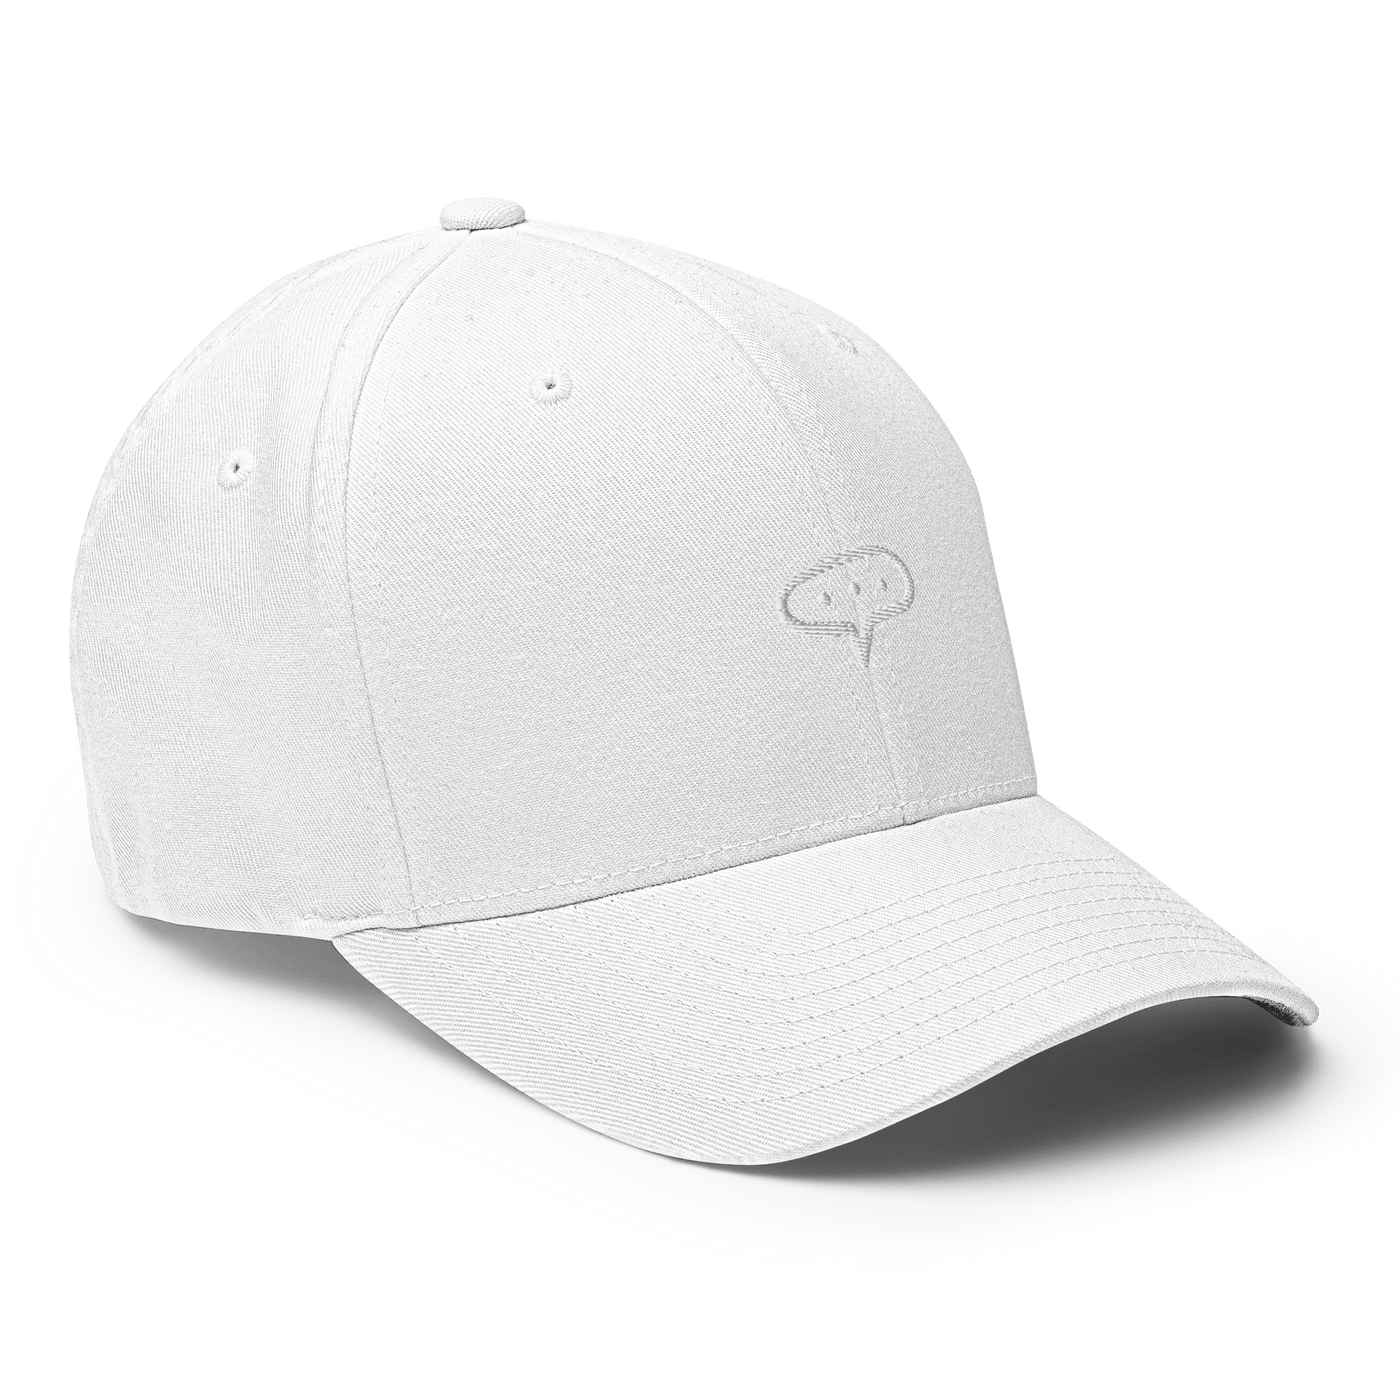 Thinking Flexfit Cap - Khaki - S/M - Just Another Cap Store